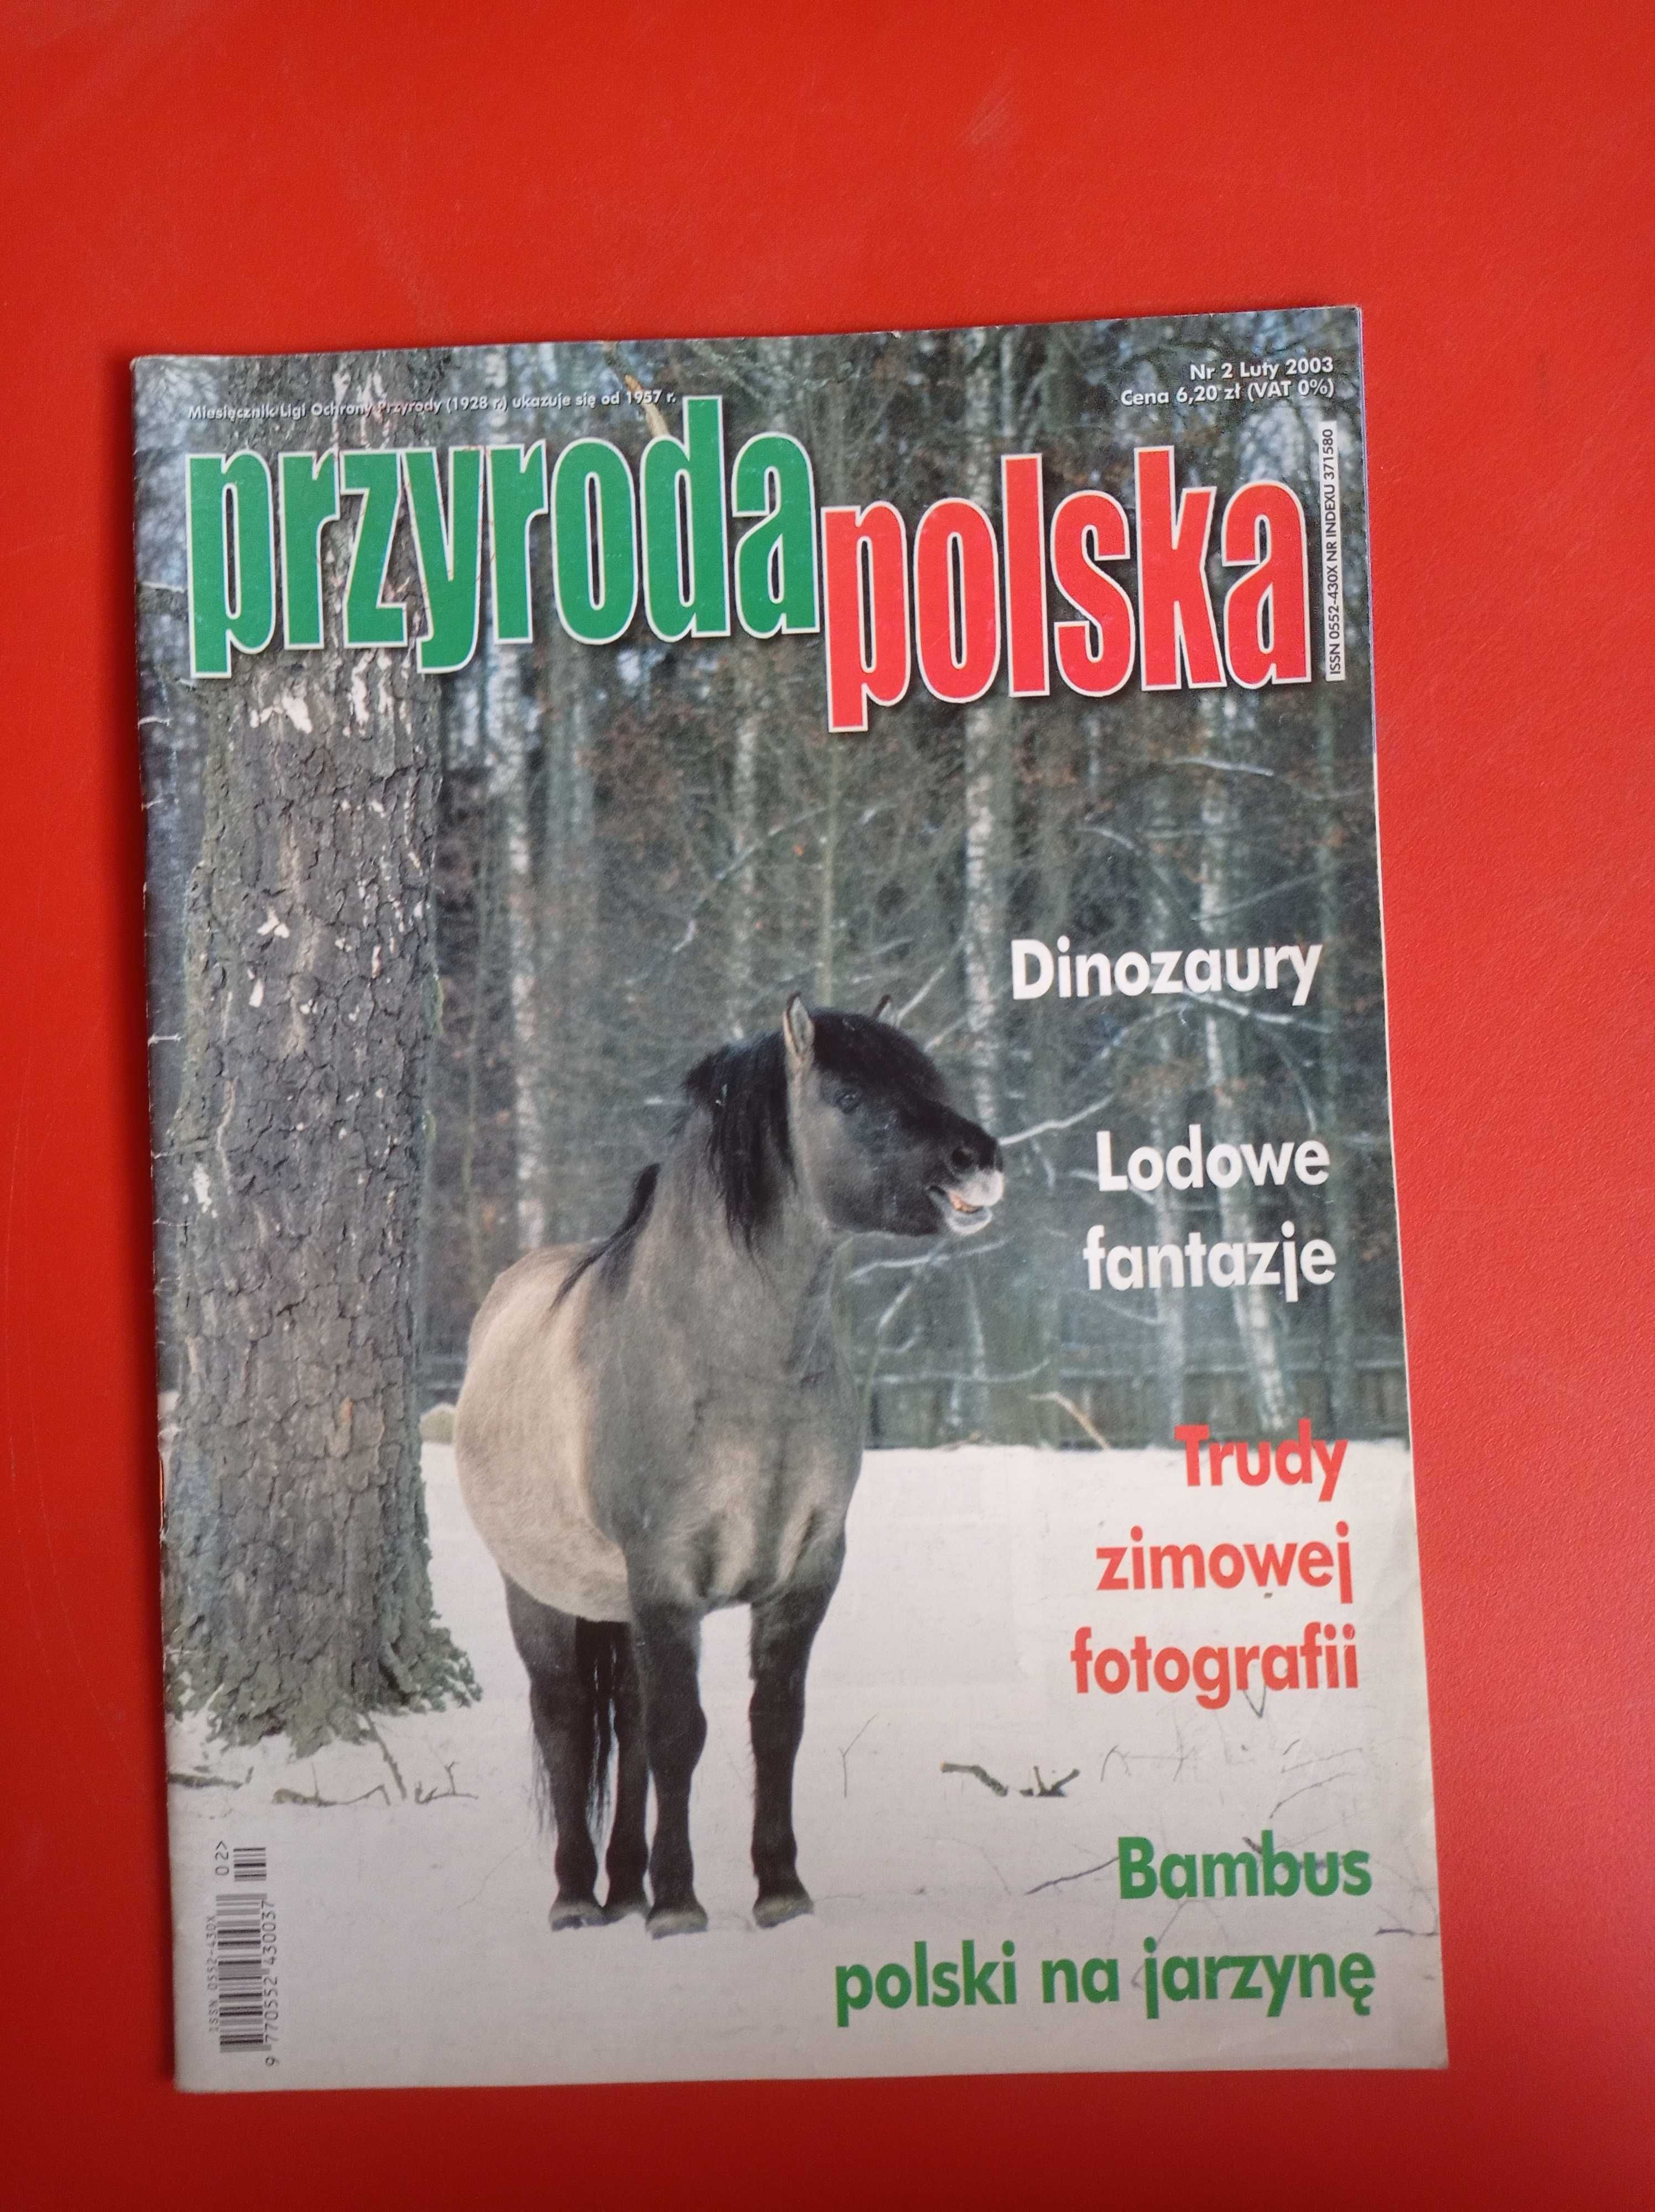 Przyroda polska nr 2/2003, luty 2003